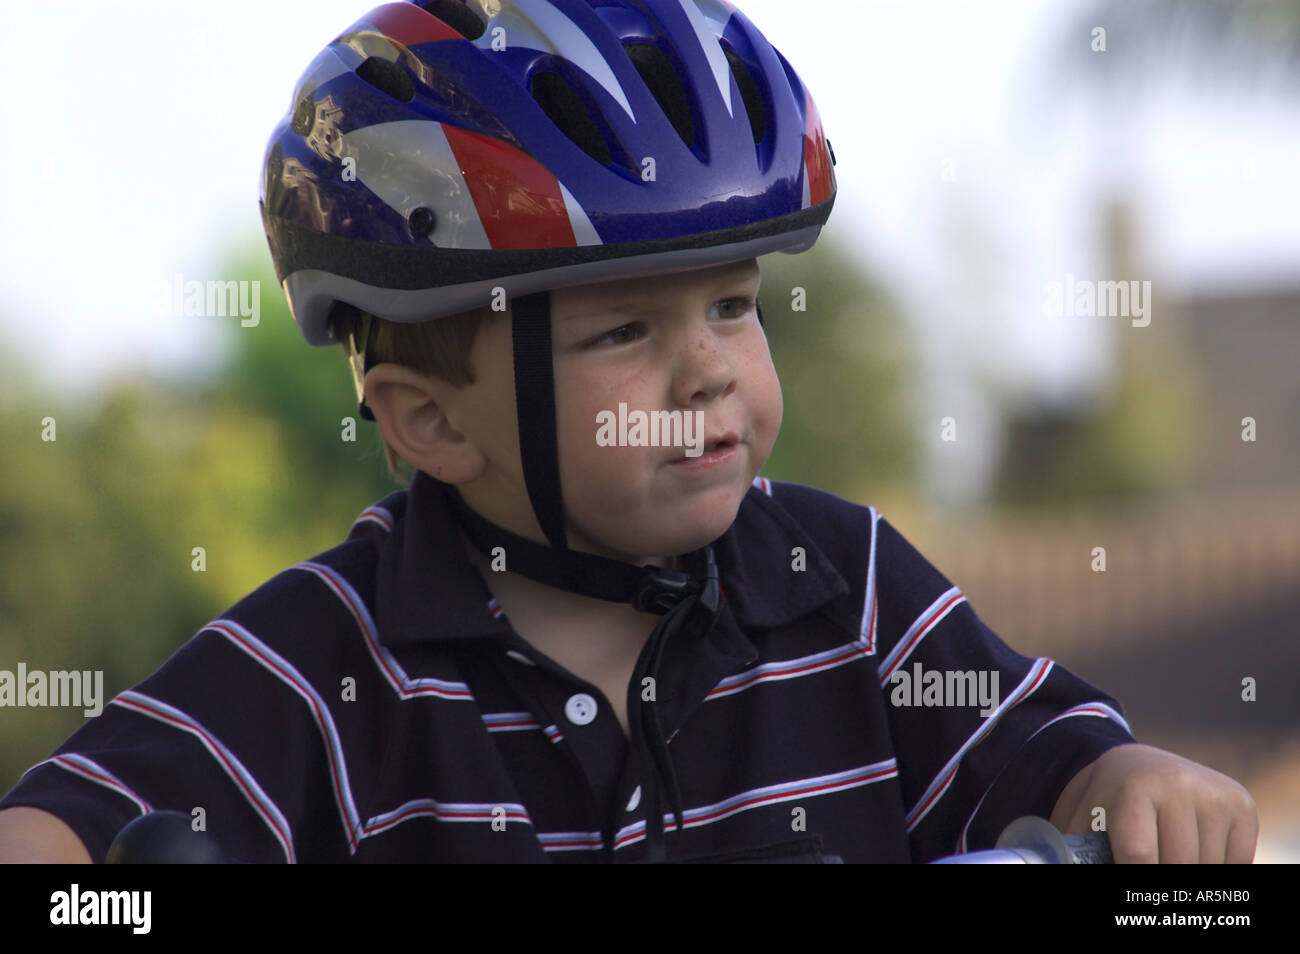 young boy with bike helmet Stock Photo